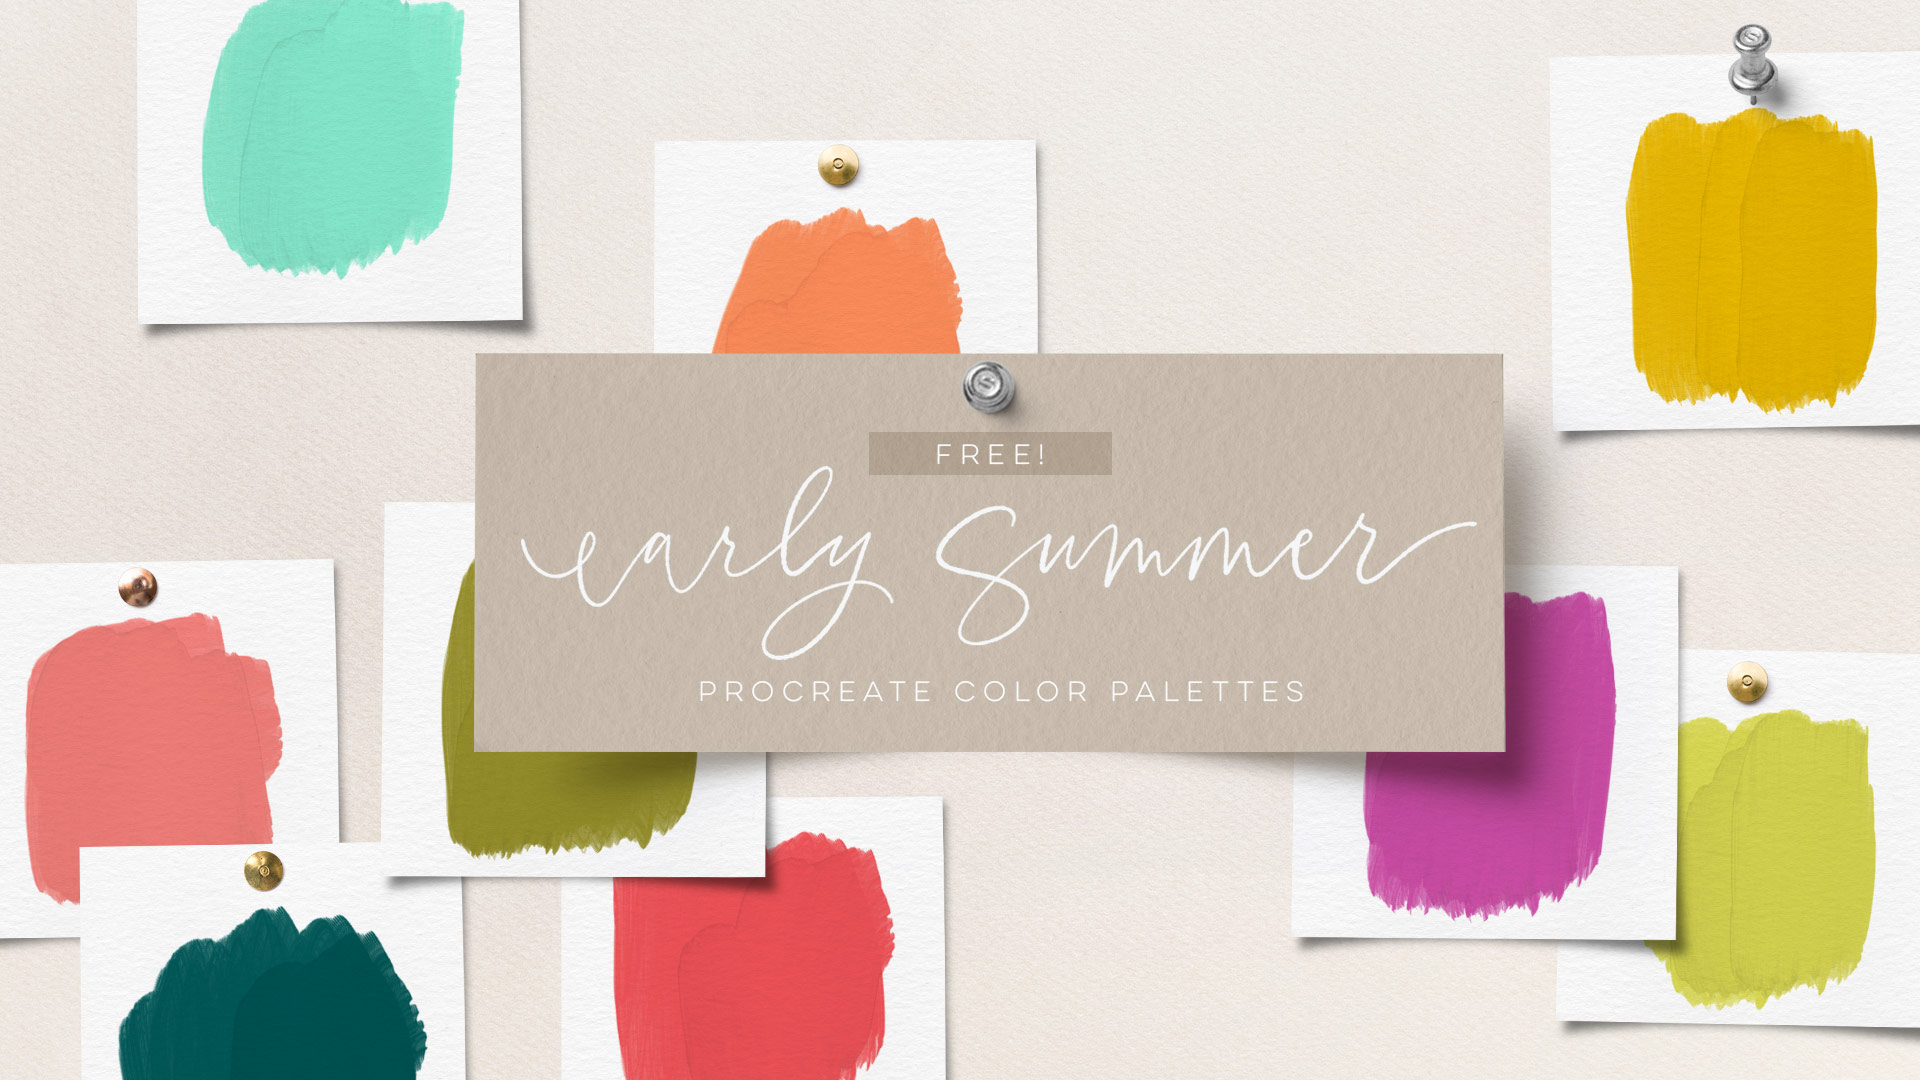 Free Procreate color palettes vivid colors for summer